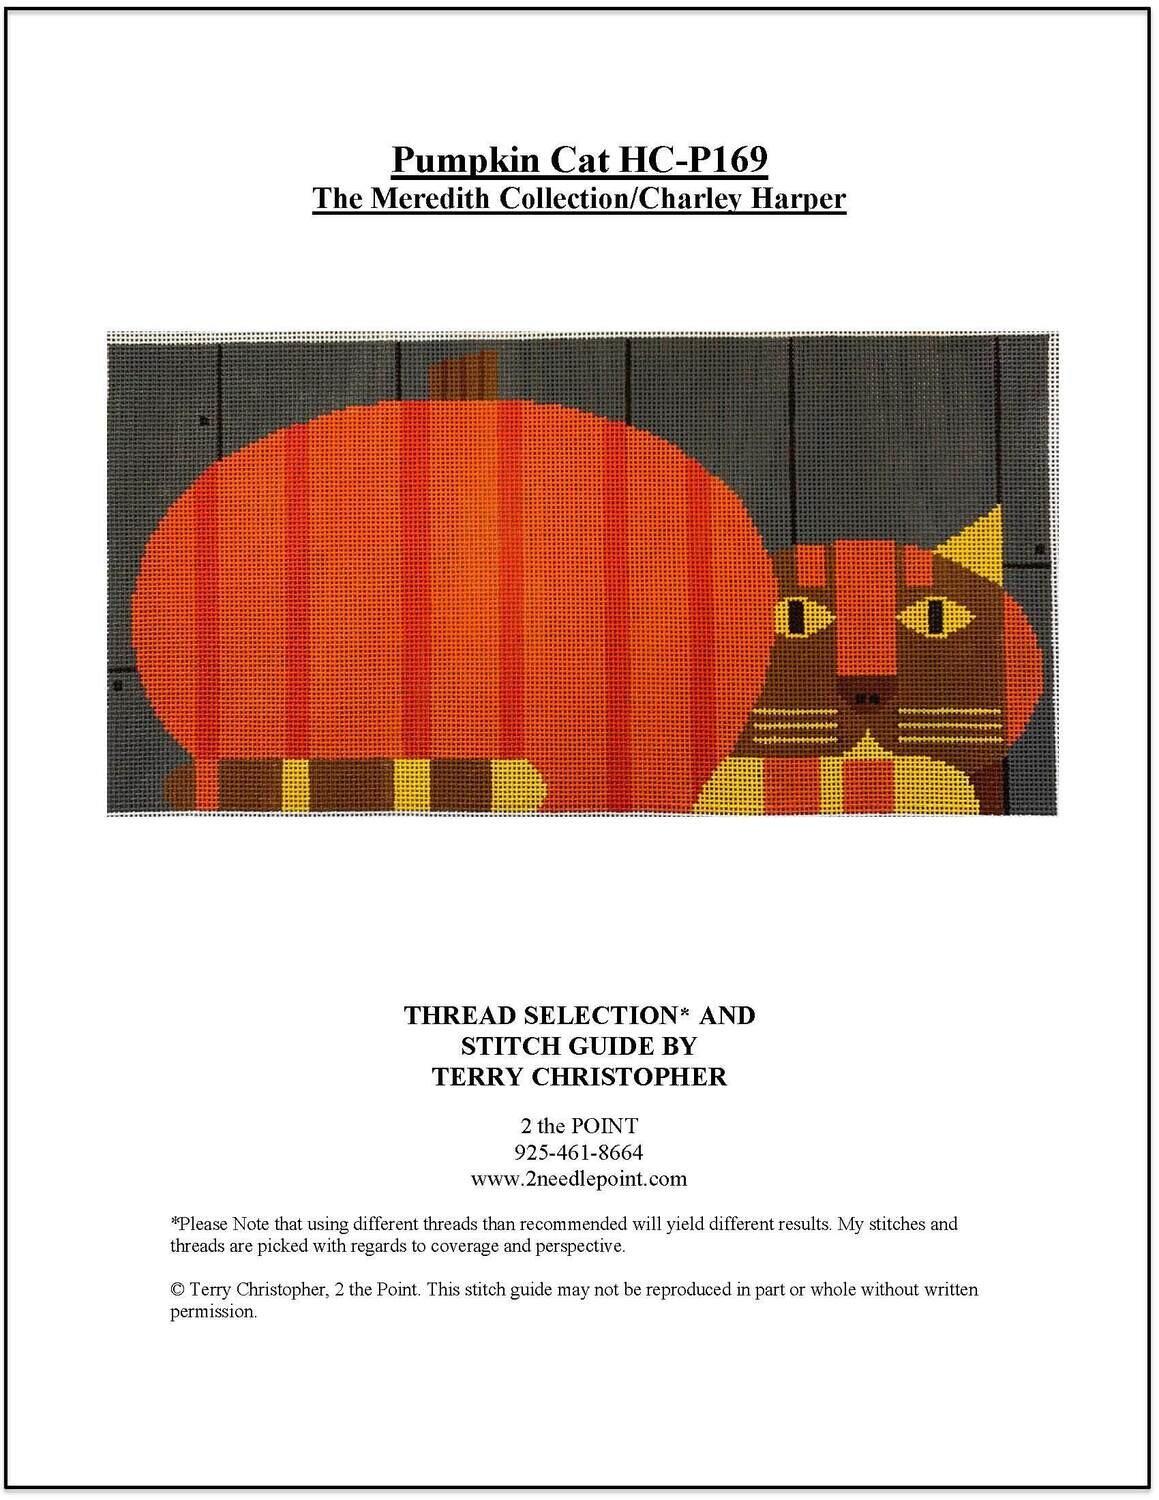 Charlie Harper/Meredith Collection, Pumpkin Cat HCP169